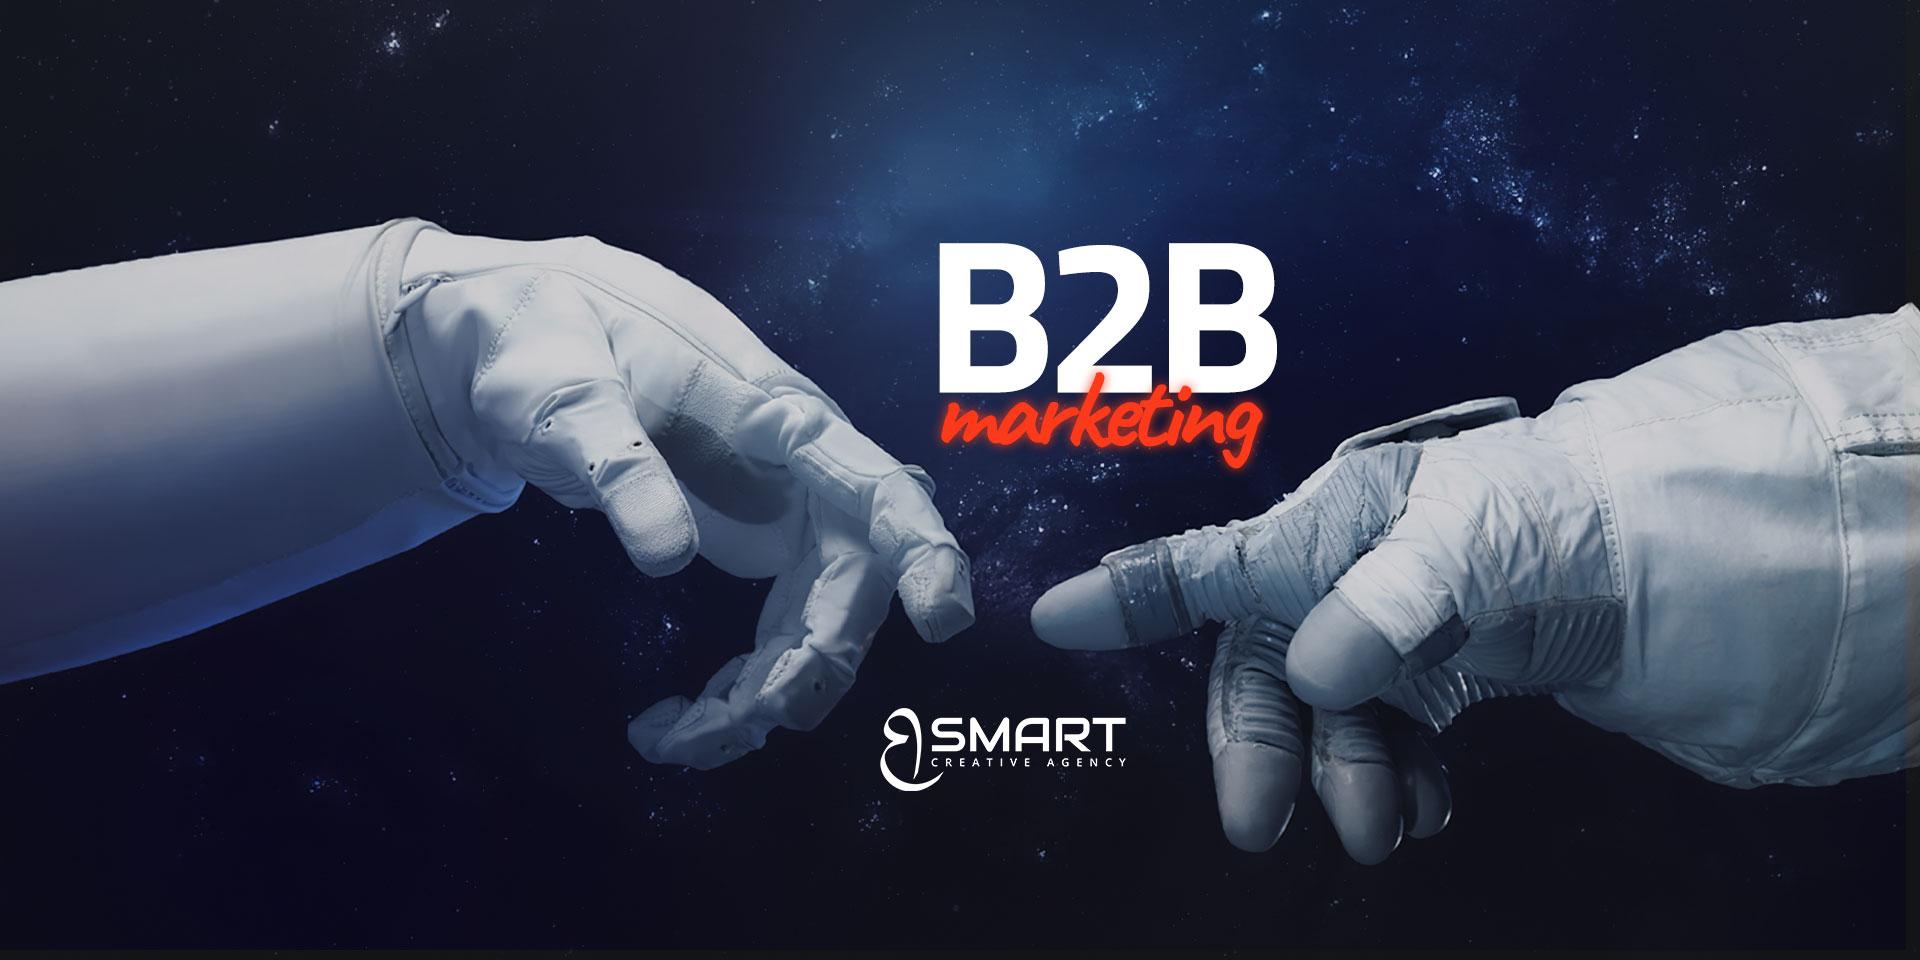 The world of B2B Marketing